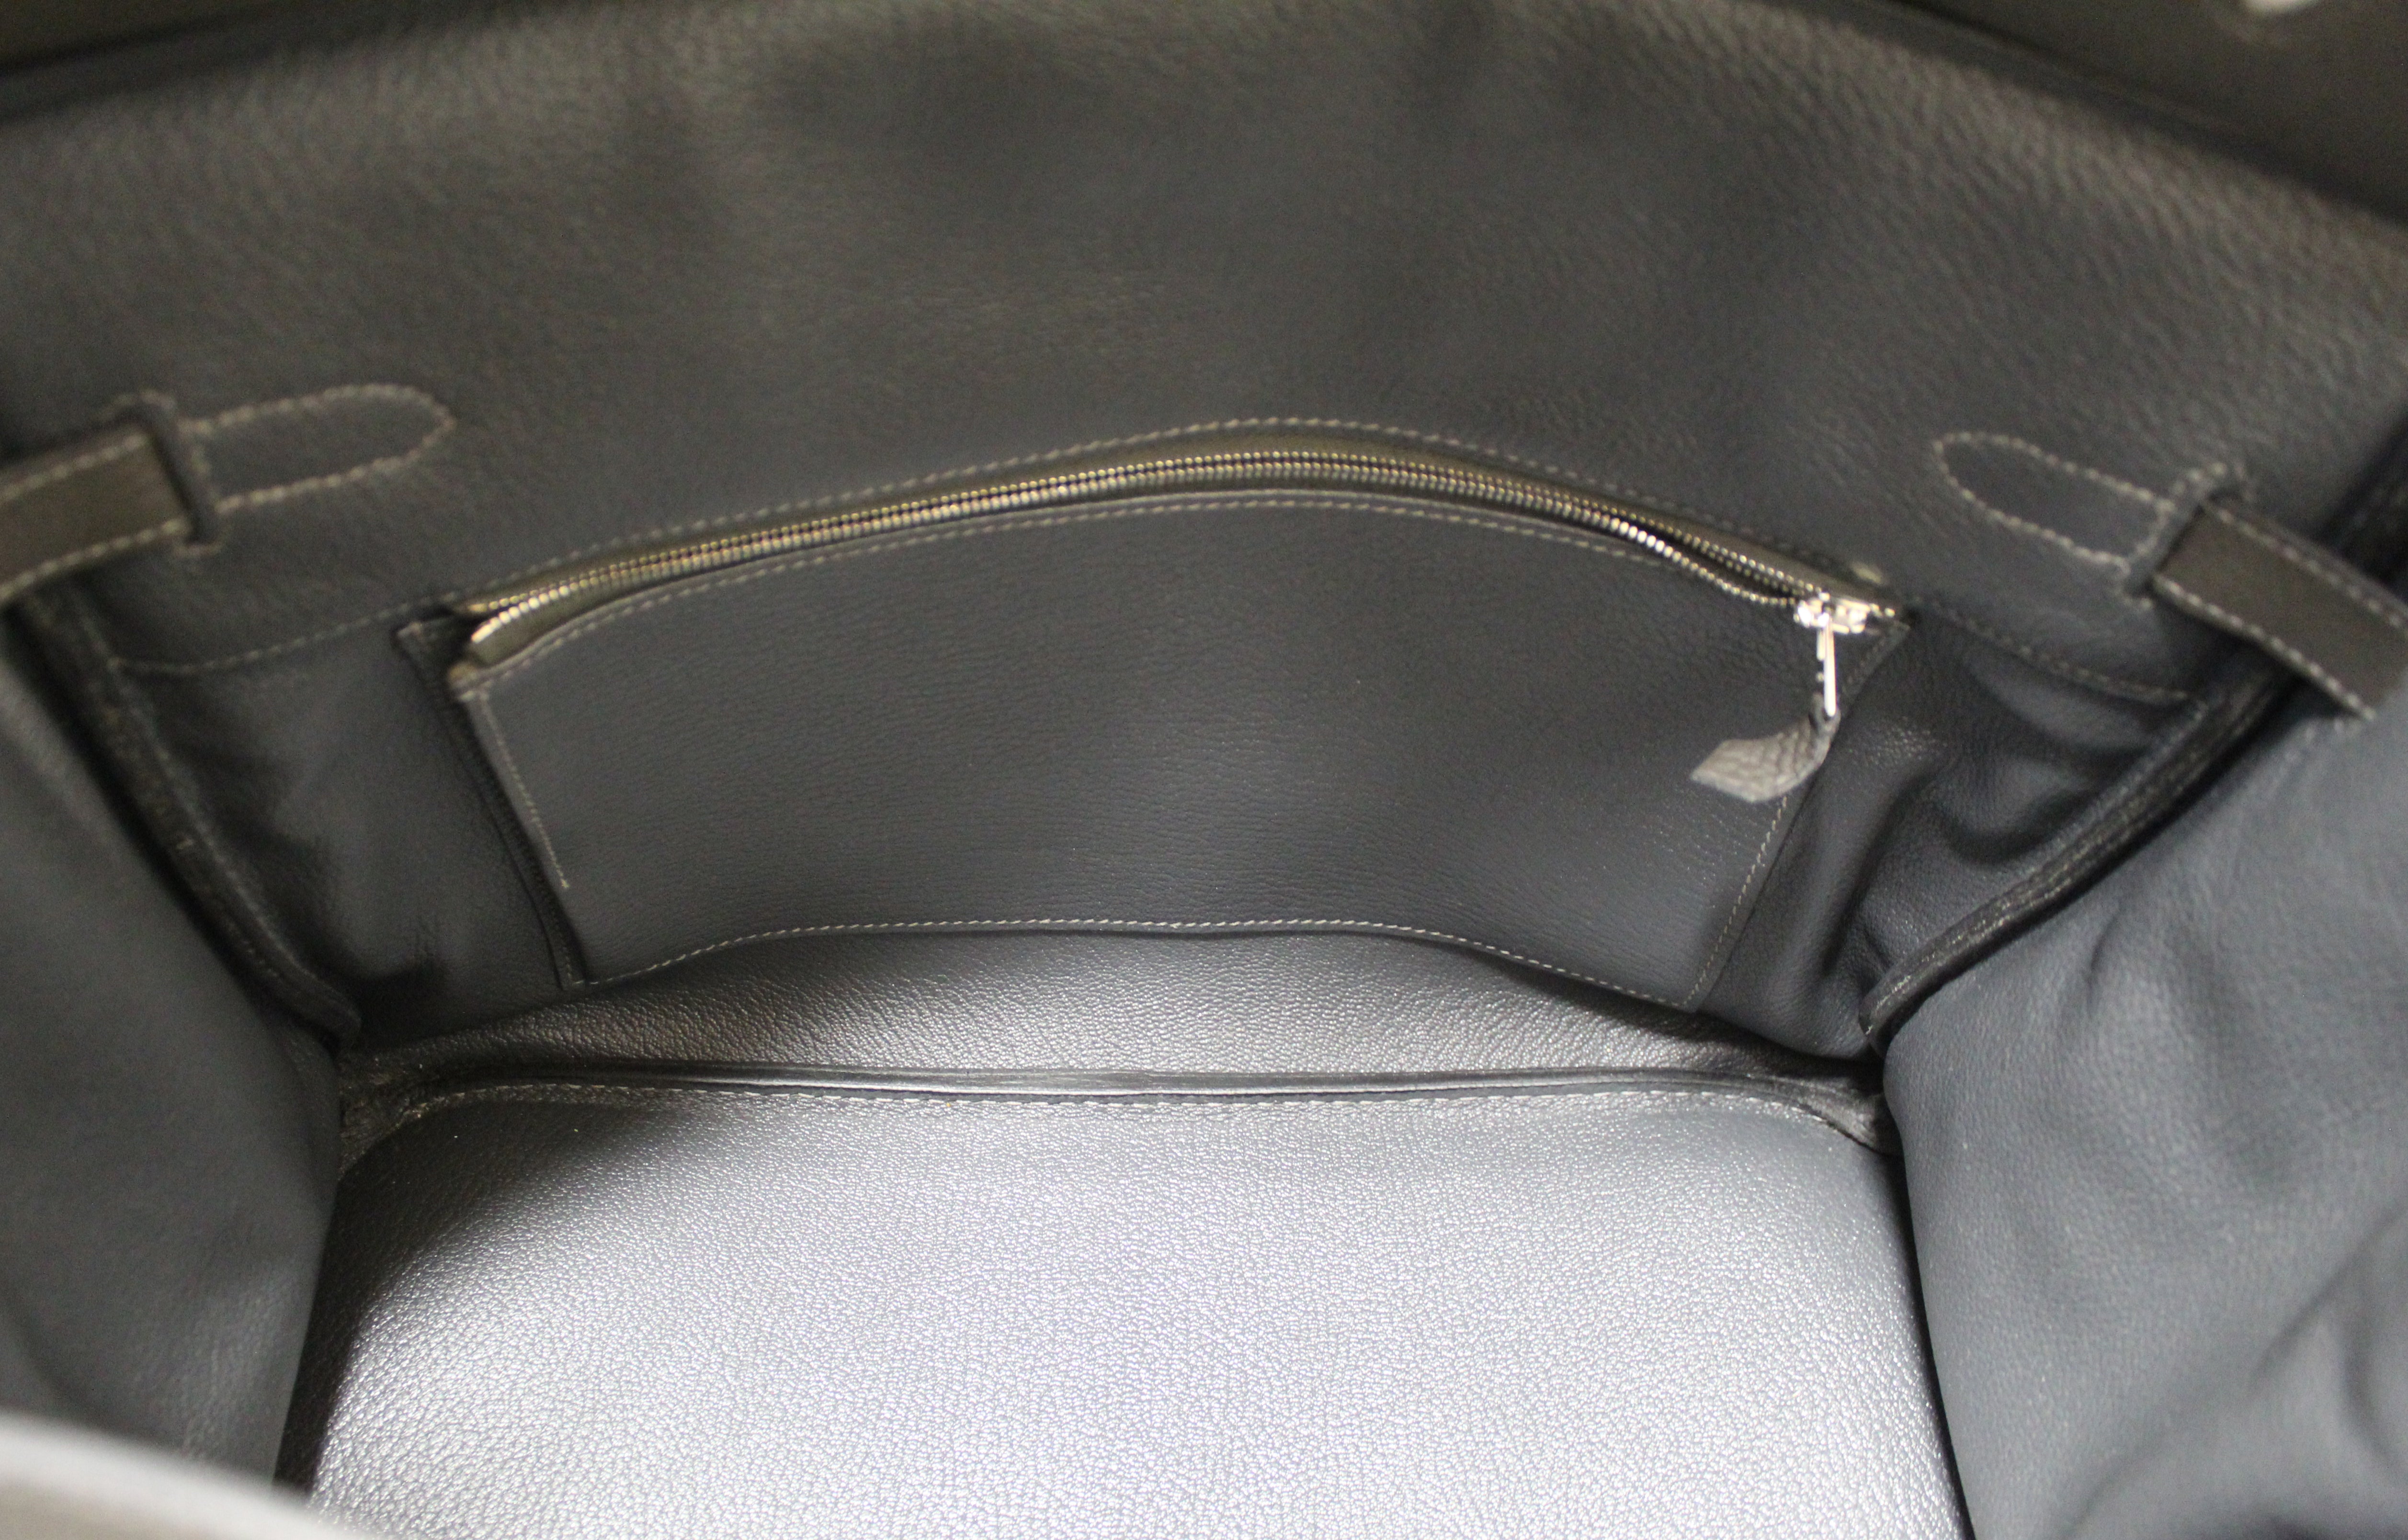 Authentic Hermes Grey Etain Togo Leather Birkin 35 Handbag